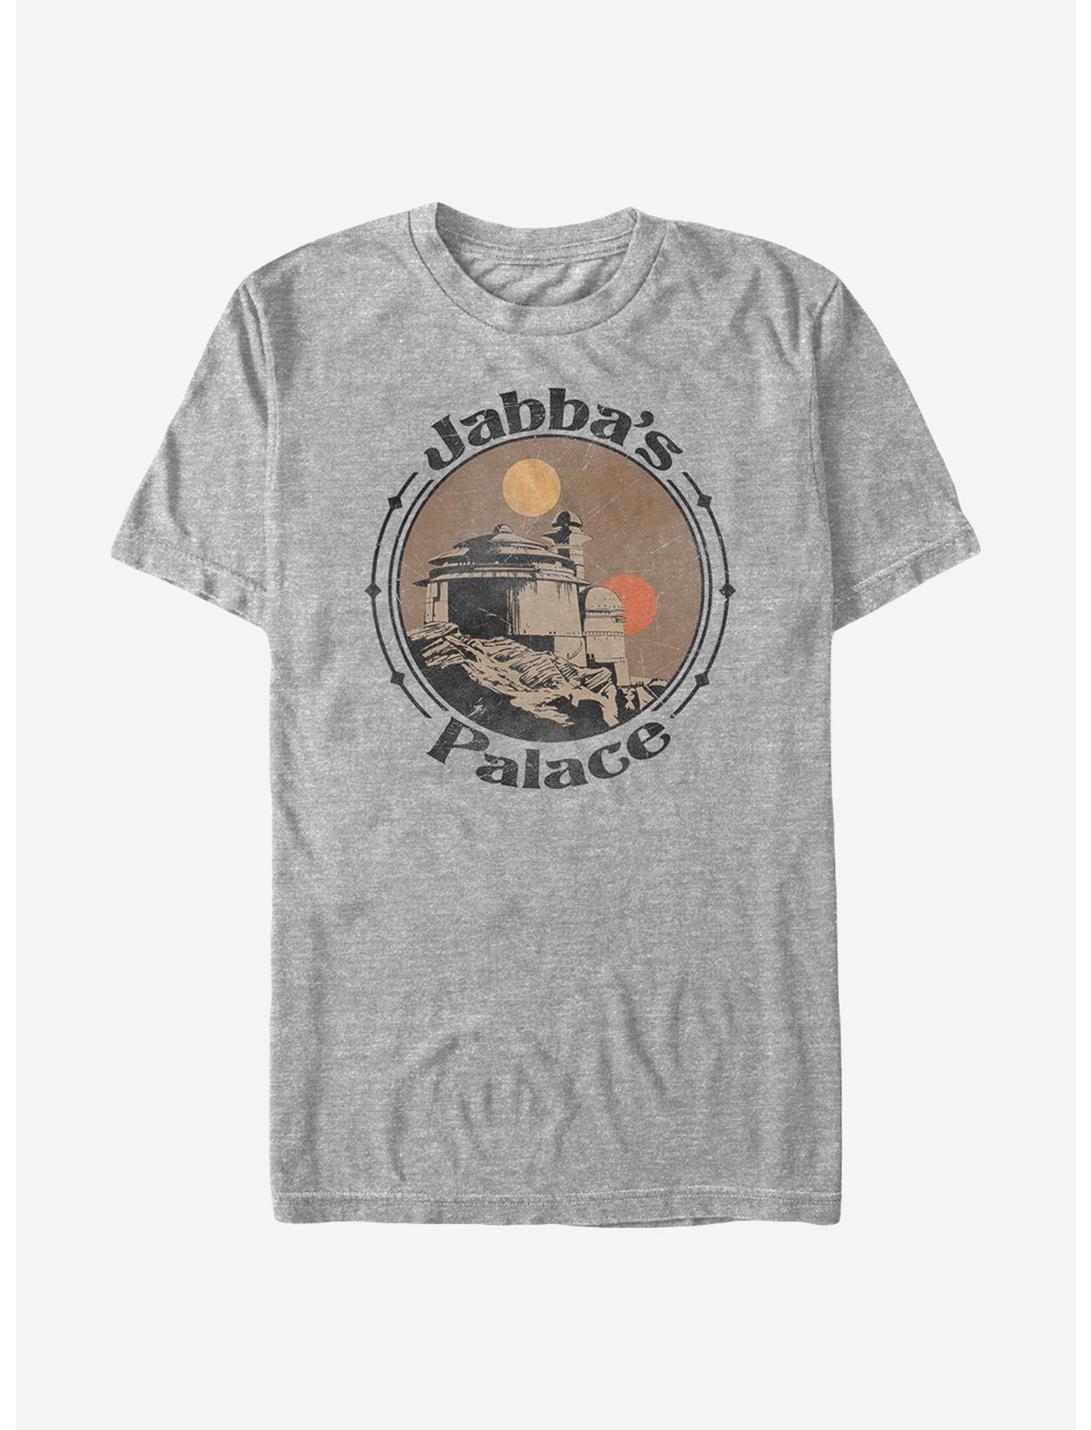 Star Wars Jabba the Hutt's Palace Tatooine T-Shirt, ATH HTR, hi-res